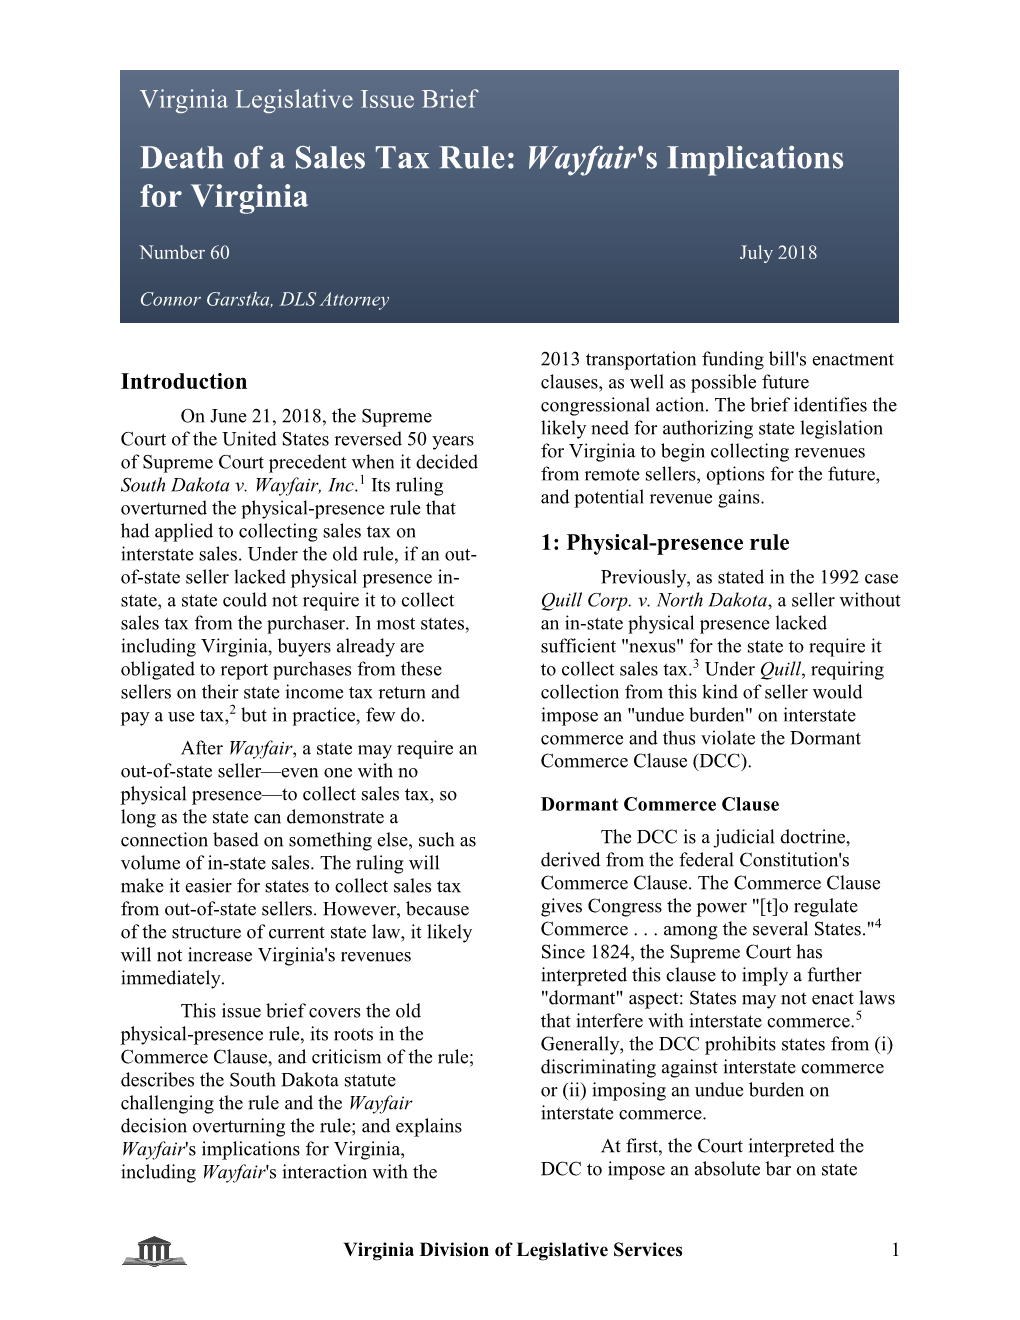 Death of a Sales Tax Rule: Wayfair's Implications for Virginia